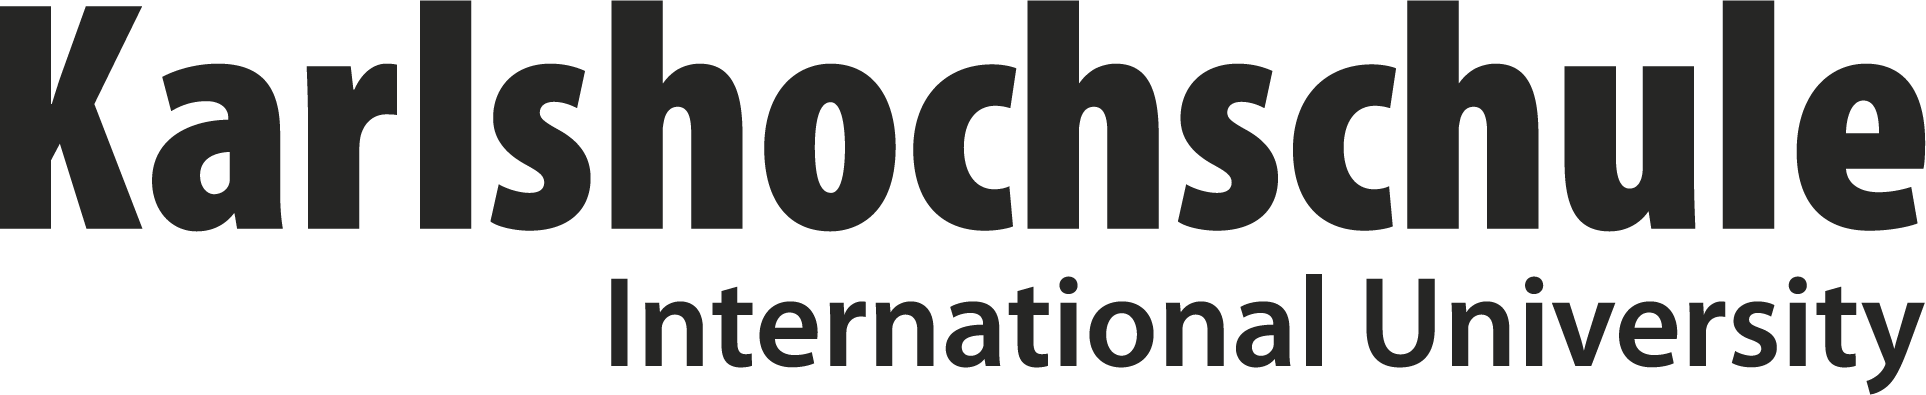 Karlschochschule International University logo